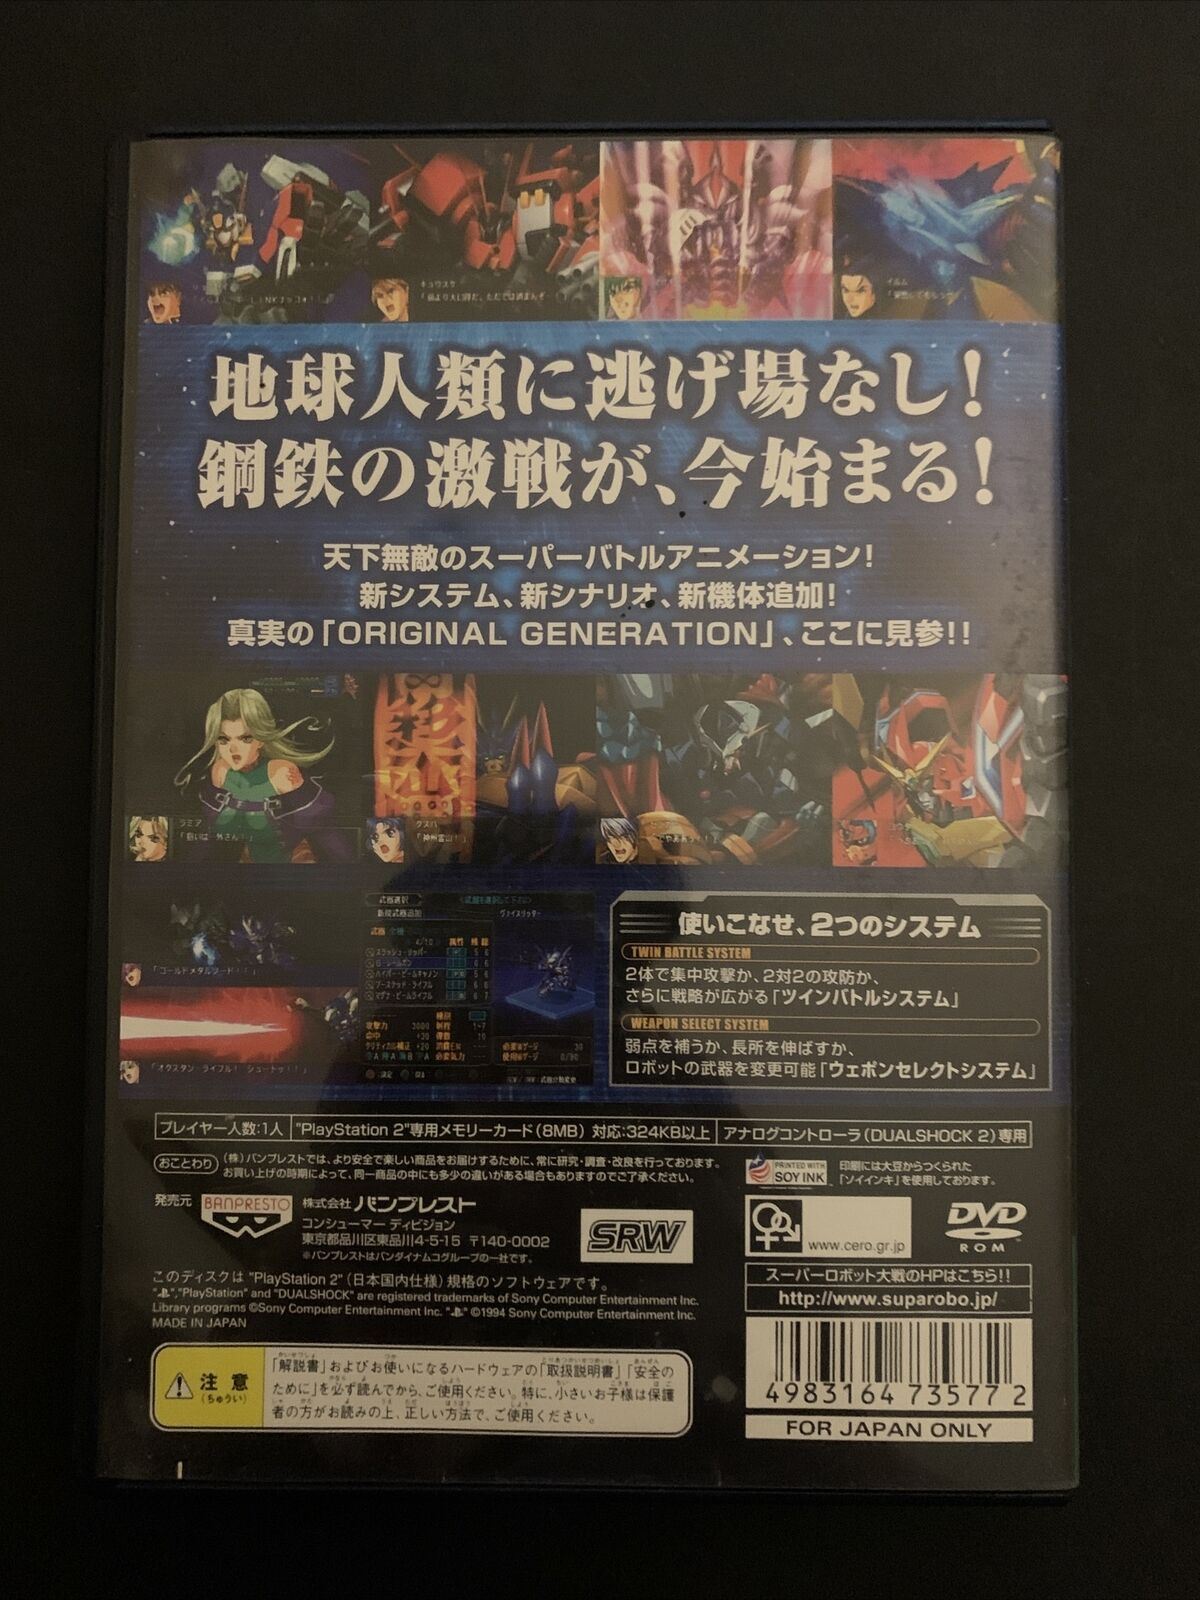 Super Robot Wars: Original Generations - PS2 Playstation NTSC-J Japan w Manual